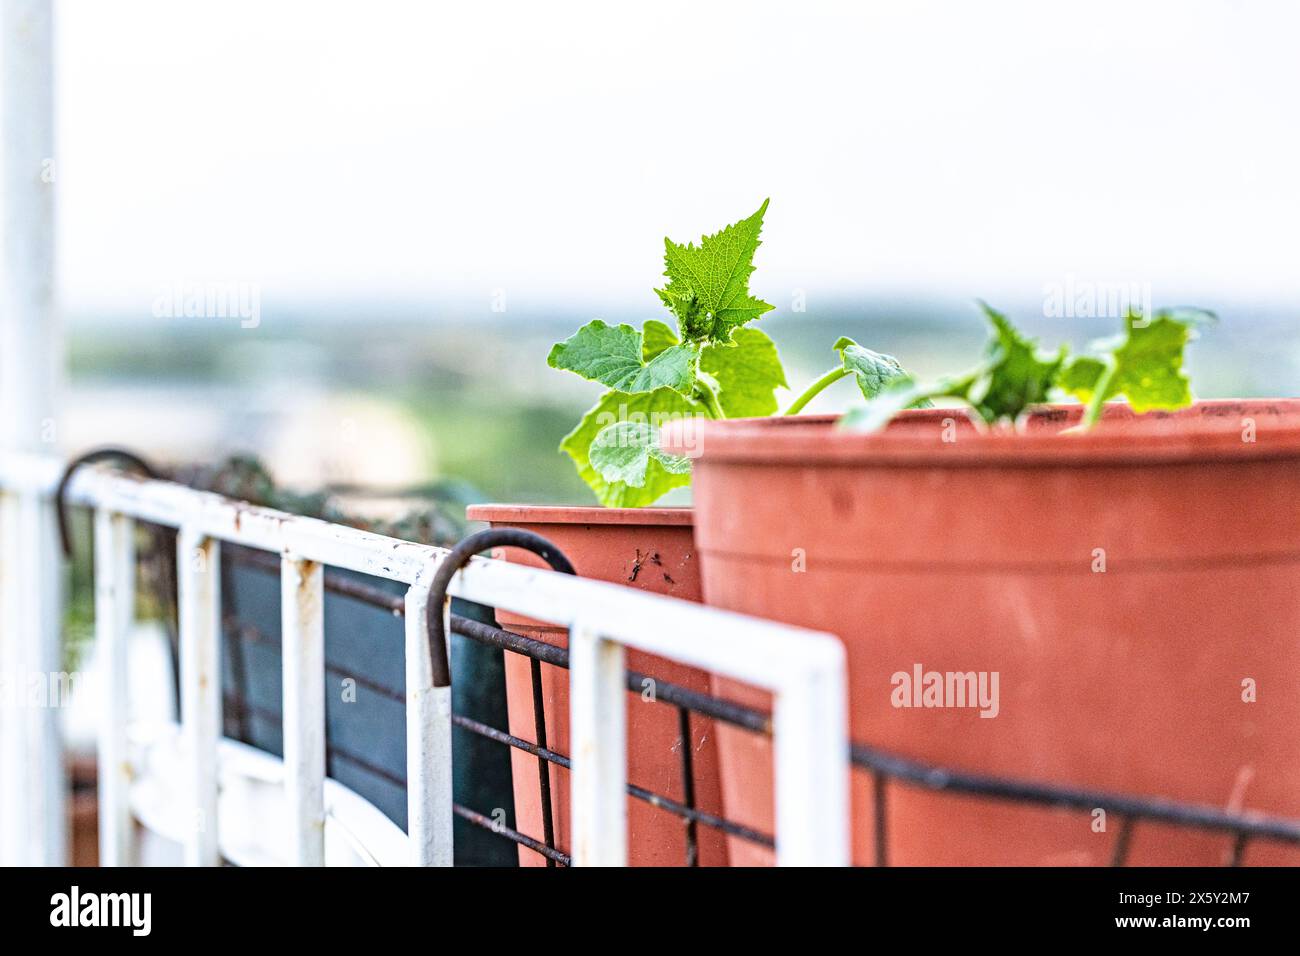 Herb growing tips, balcony herbal remedies. Stock Photo